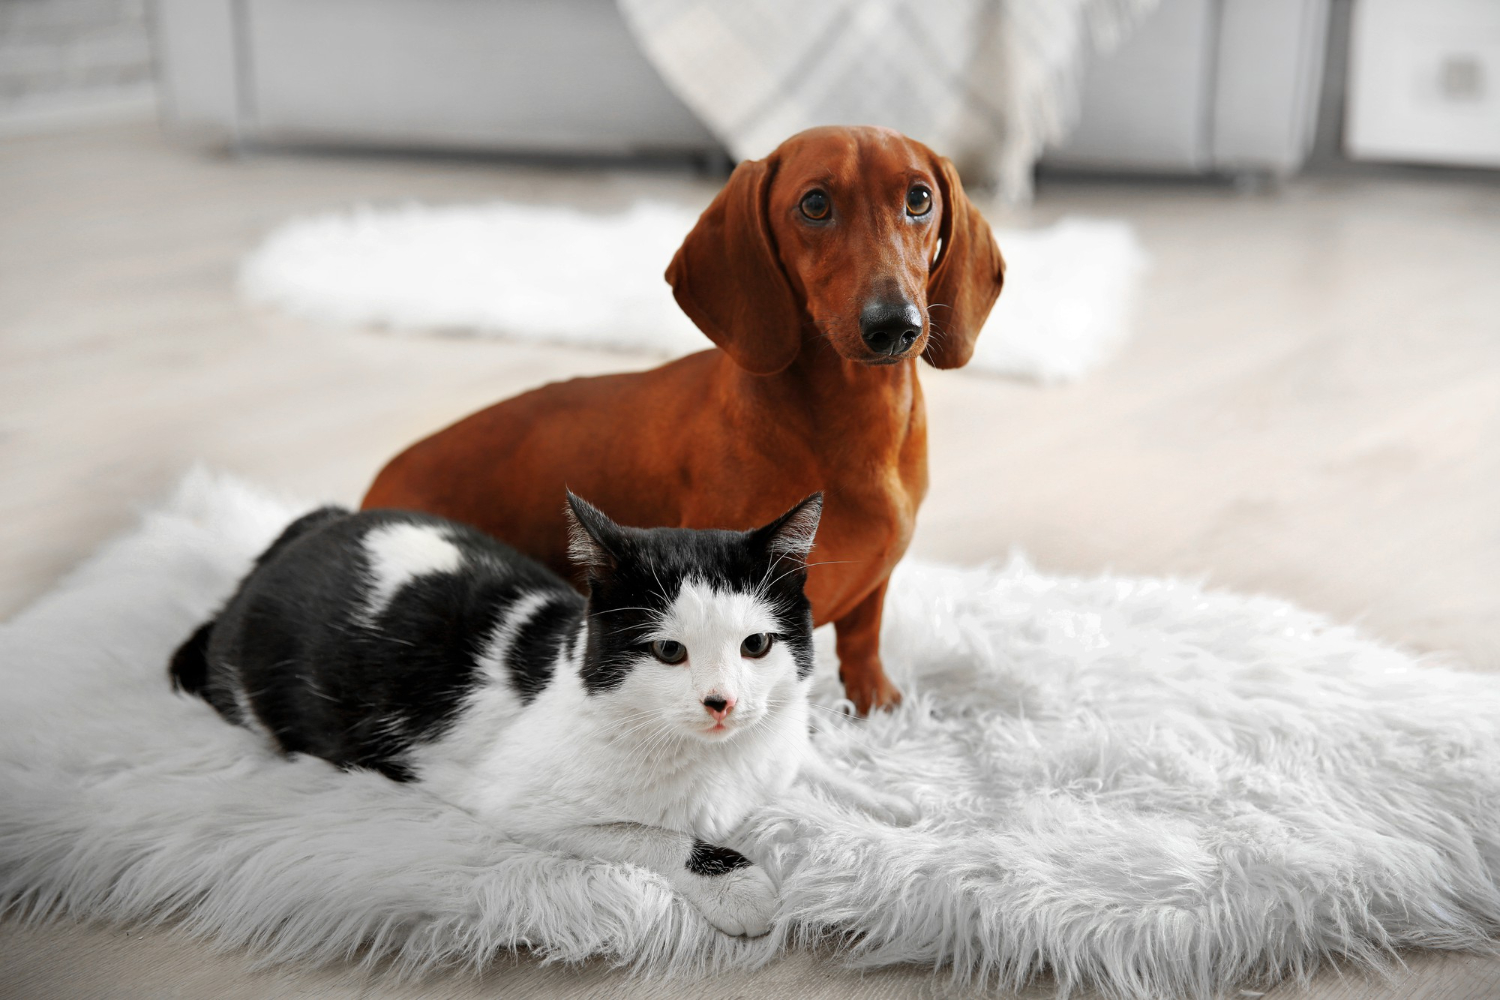 Fatos curiosos sobre gatos e cachorros: conheça as peculiaridades dos pets.